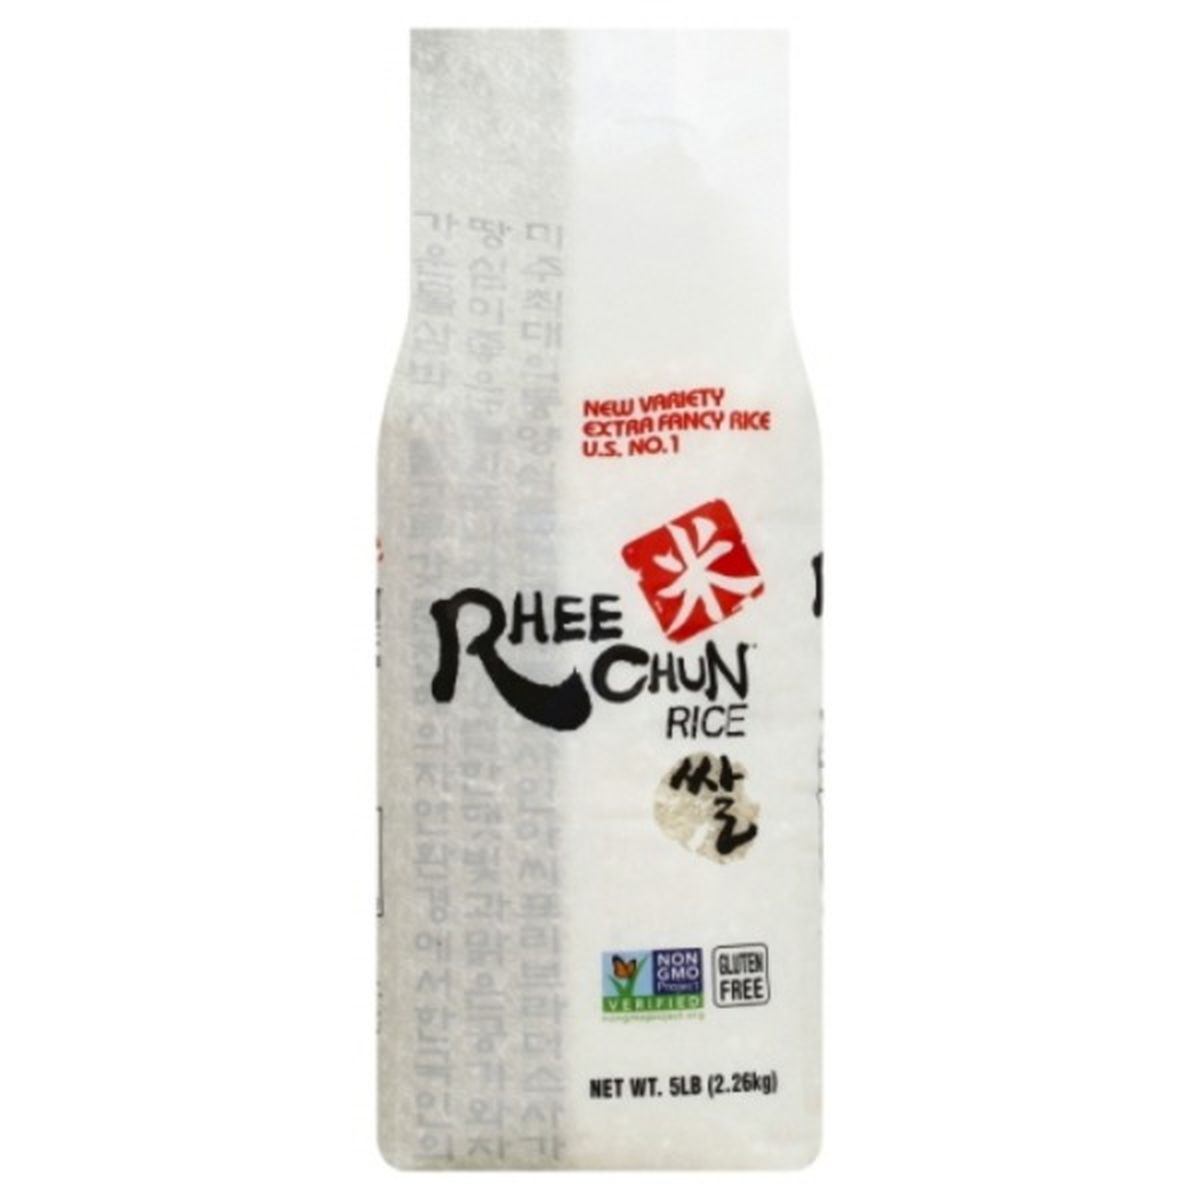 Calories in Rhee Chun Rice, Extra Fancy